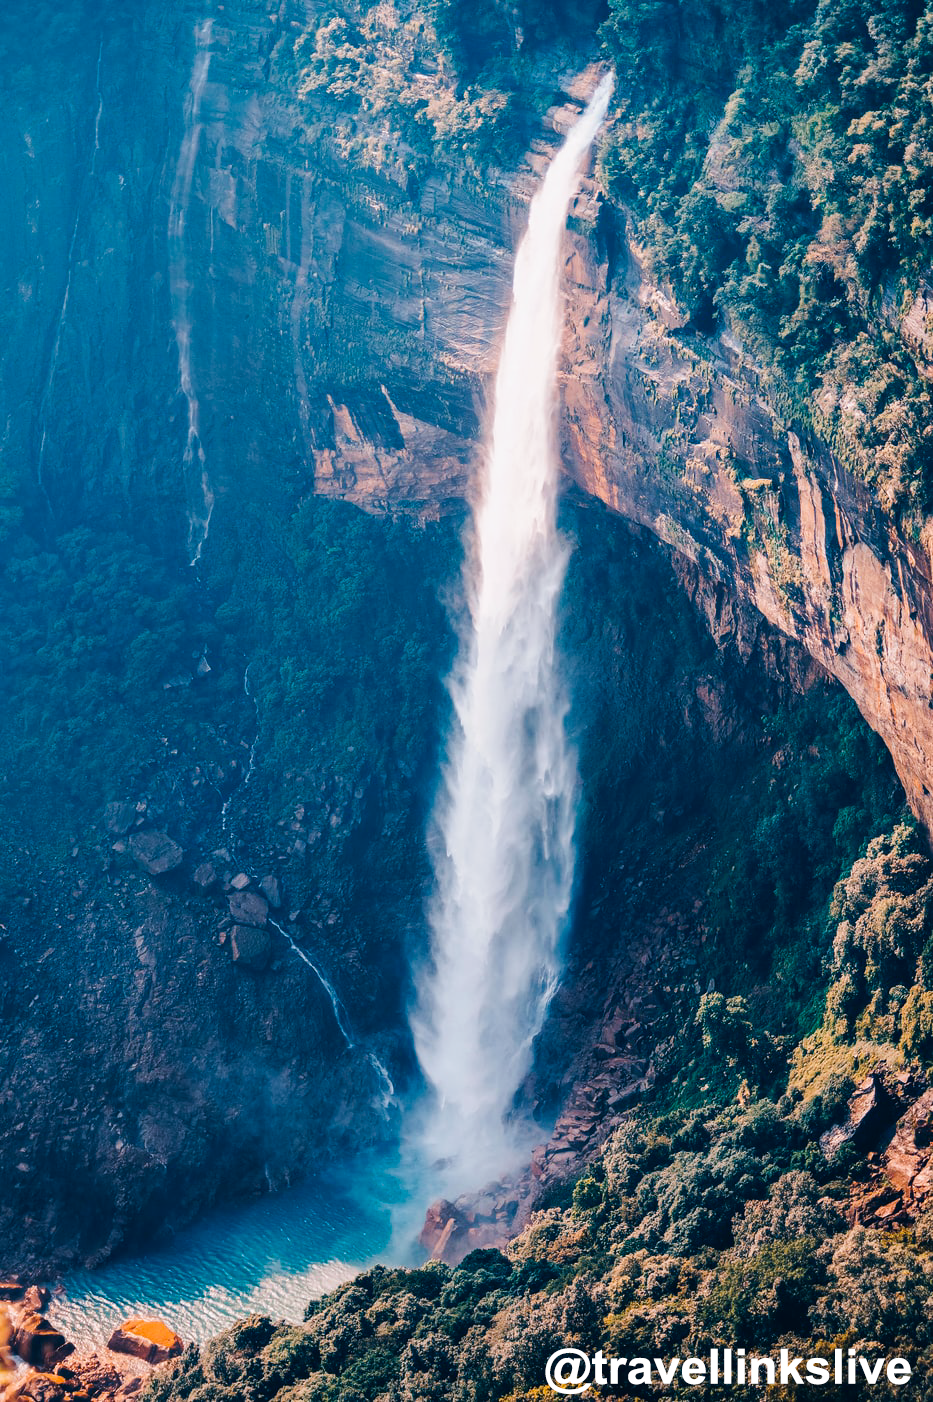 Nohkalikai Falls, Cherrapunjee